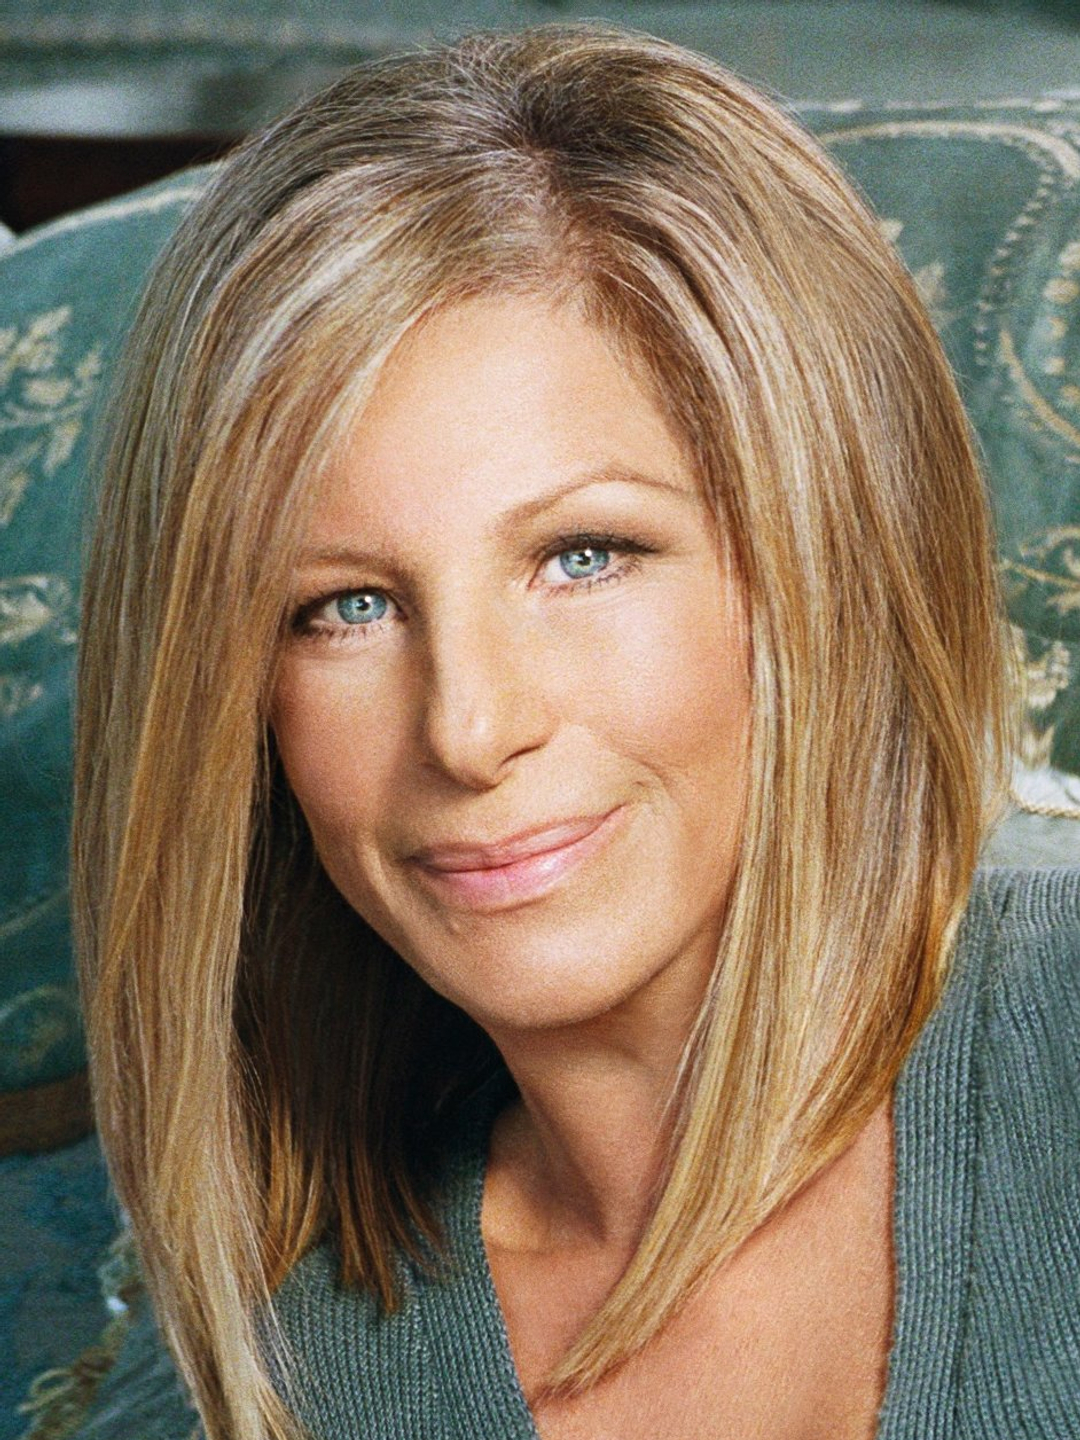 Barbra Streisand upbringing